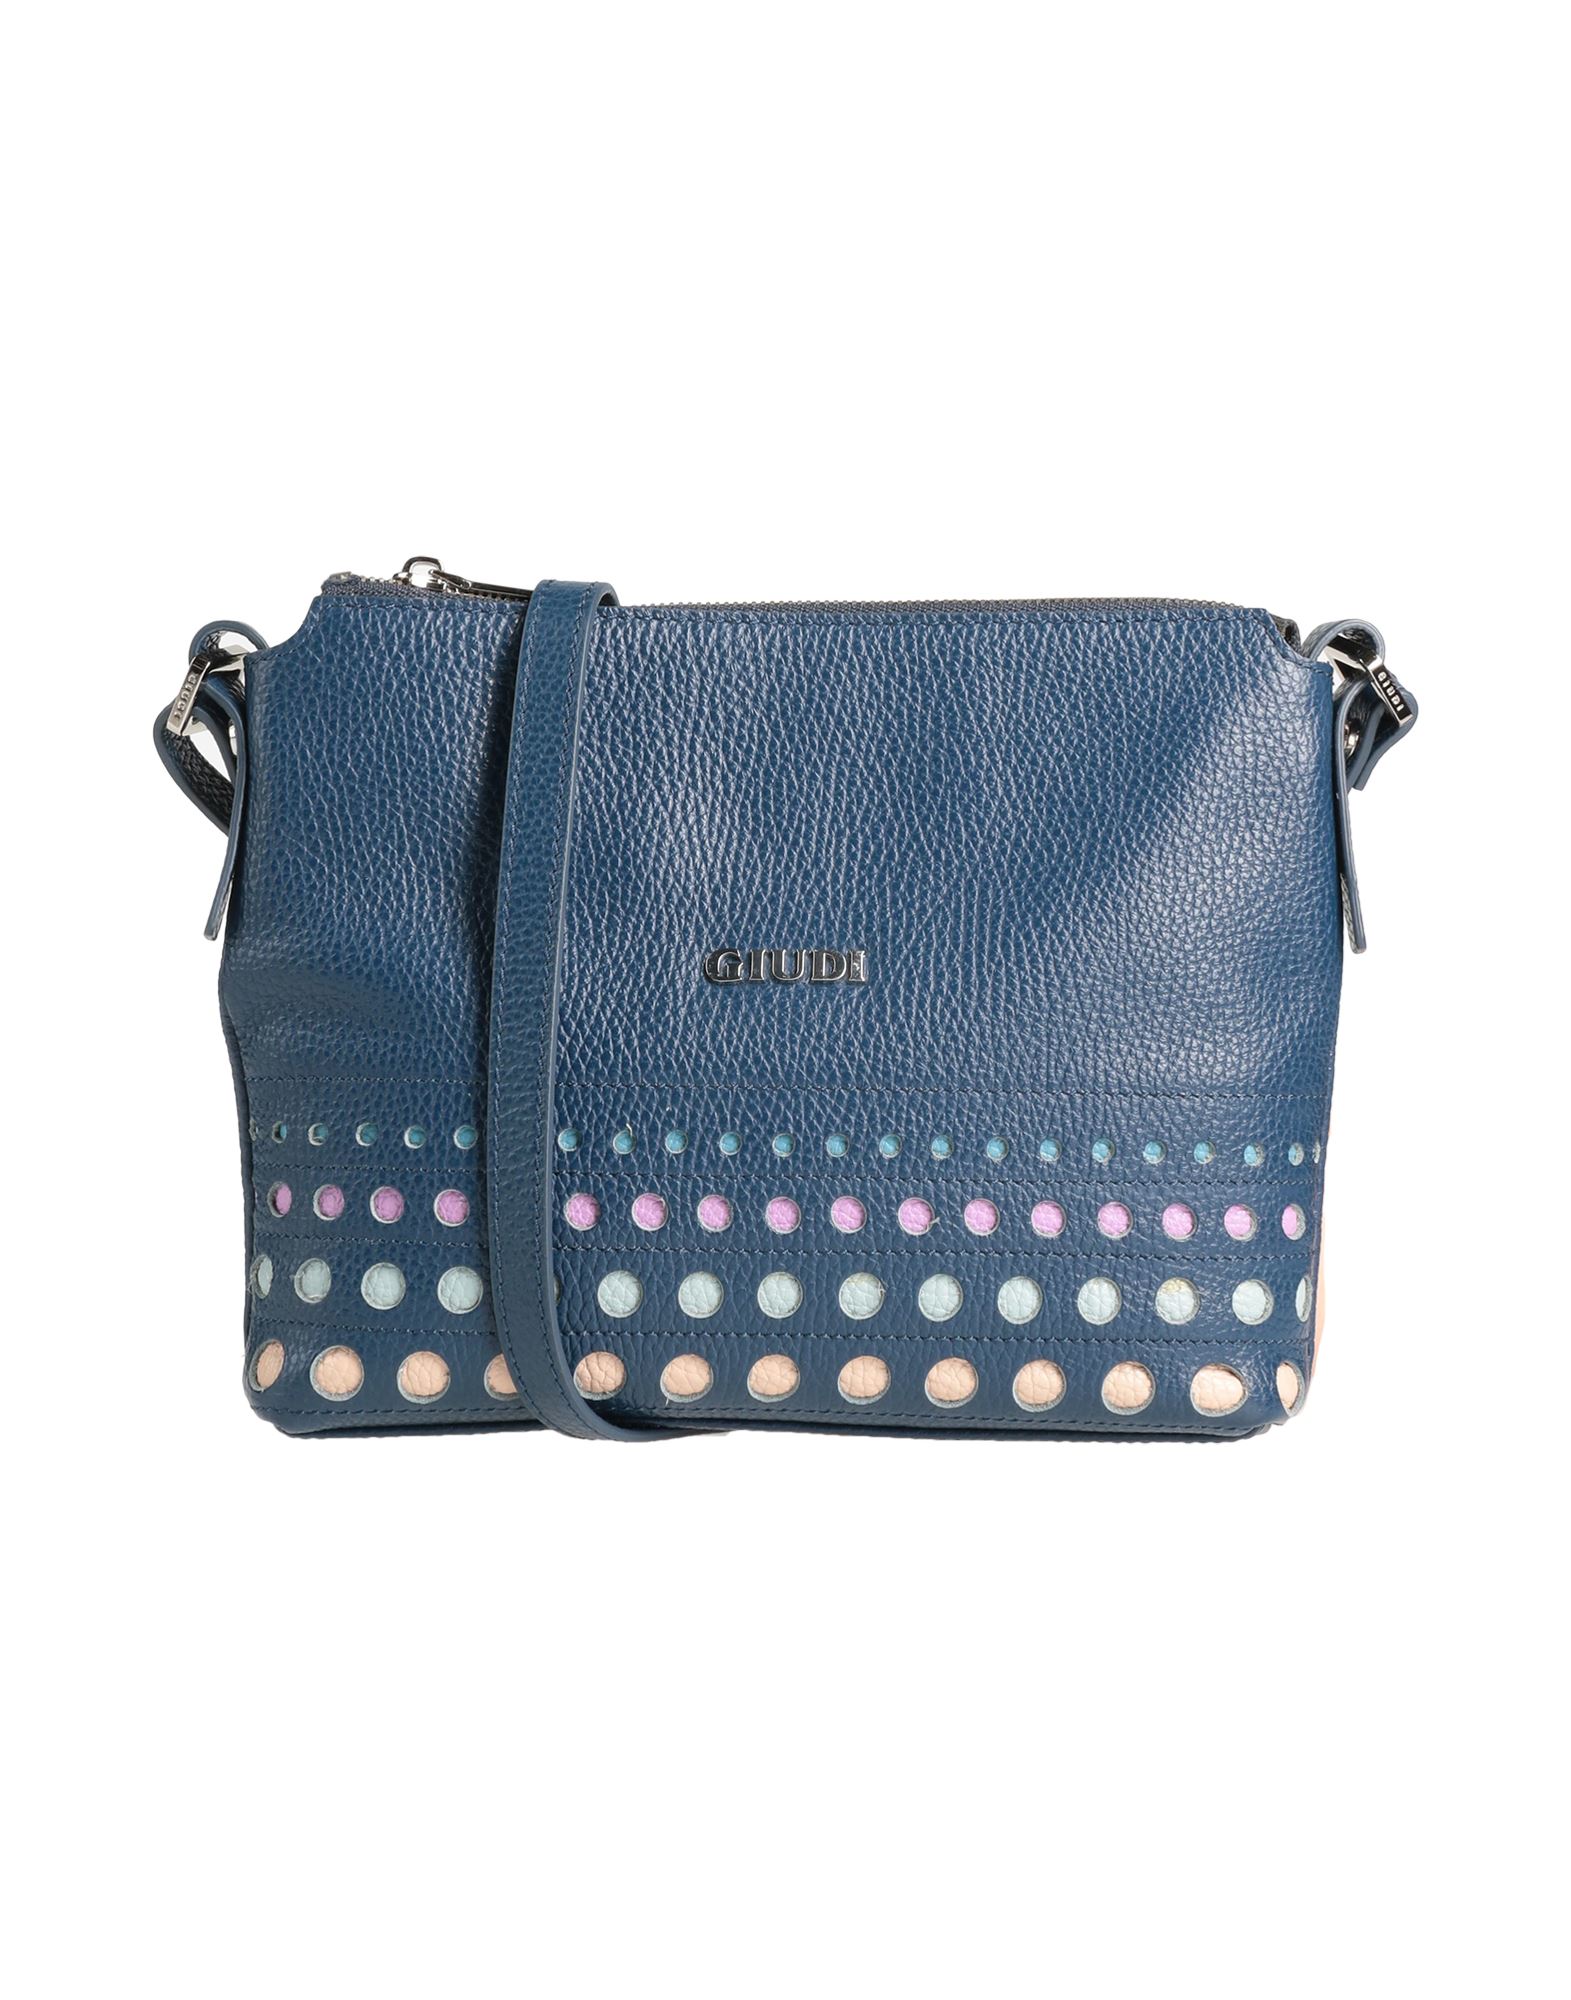 Giudi Handbags In Slate Blue